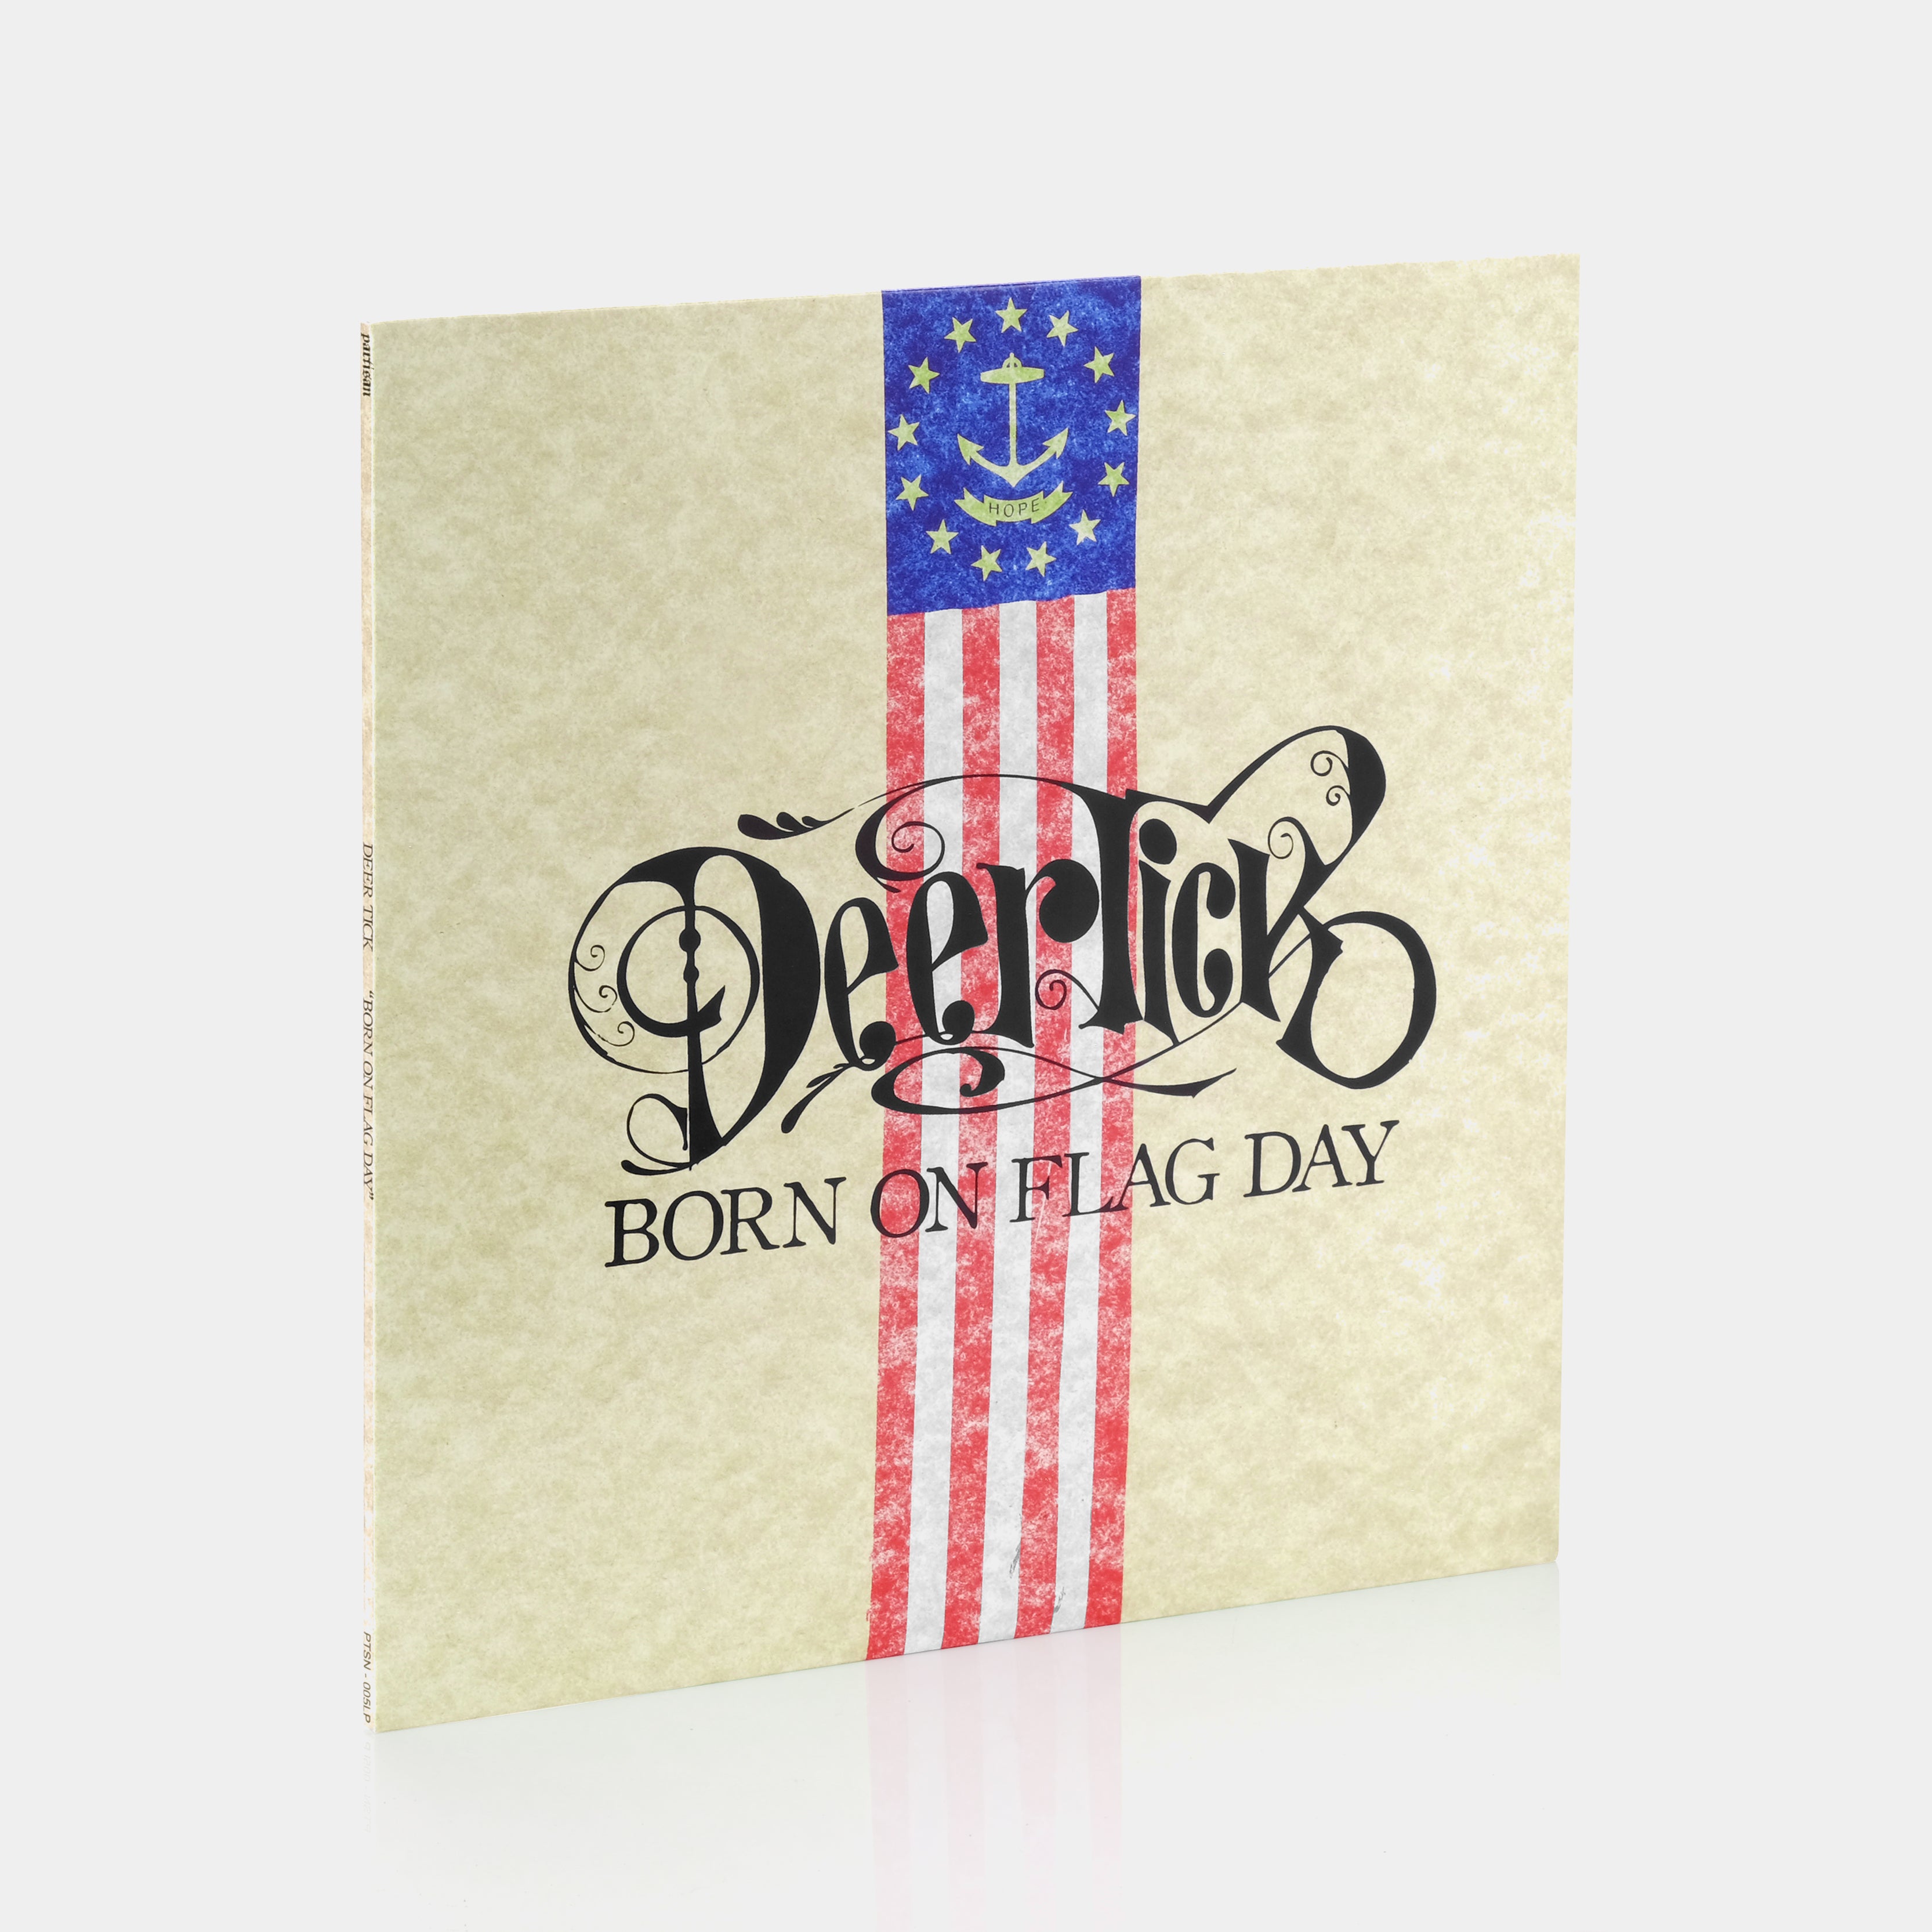 Deer Tick - Born On Flag Day LP Vinyl Record